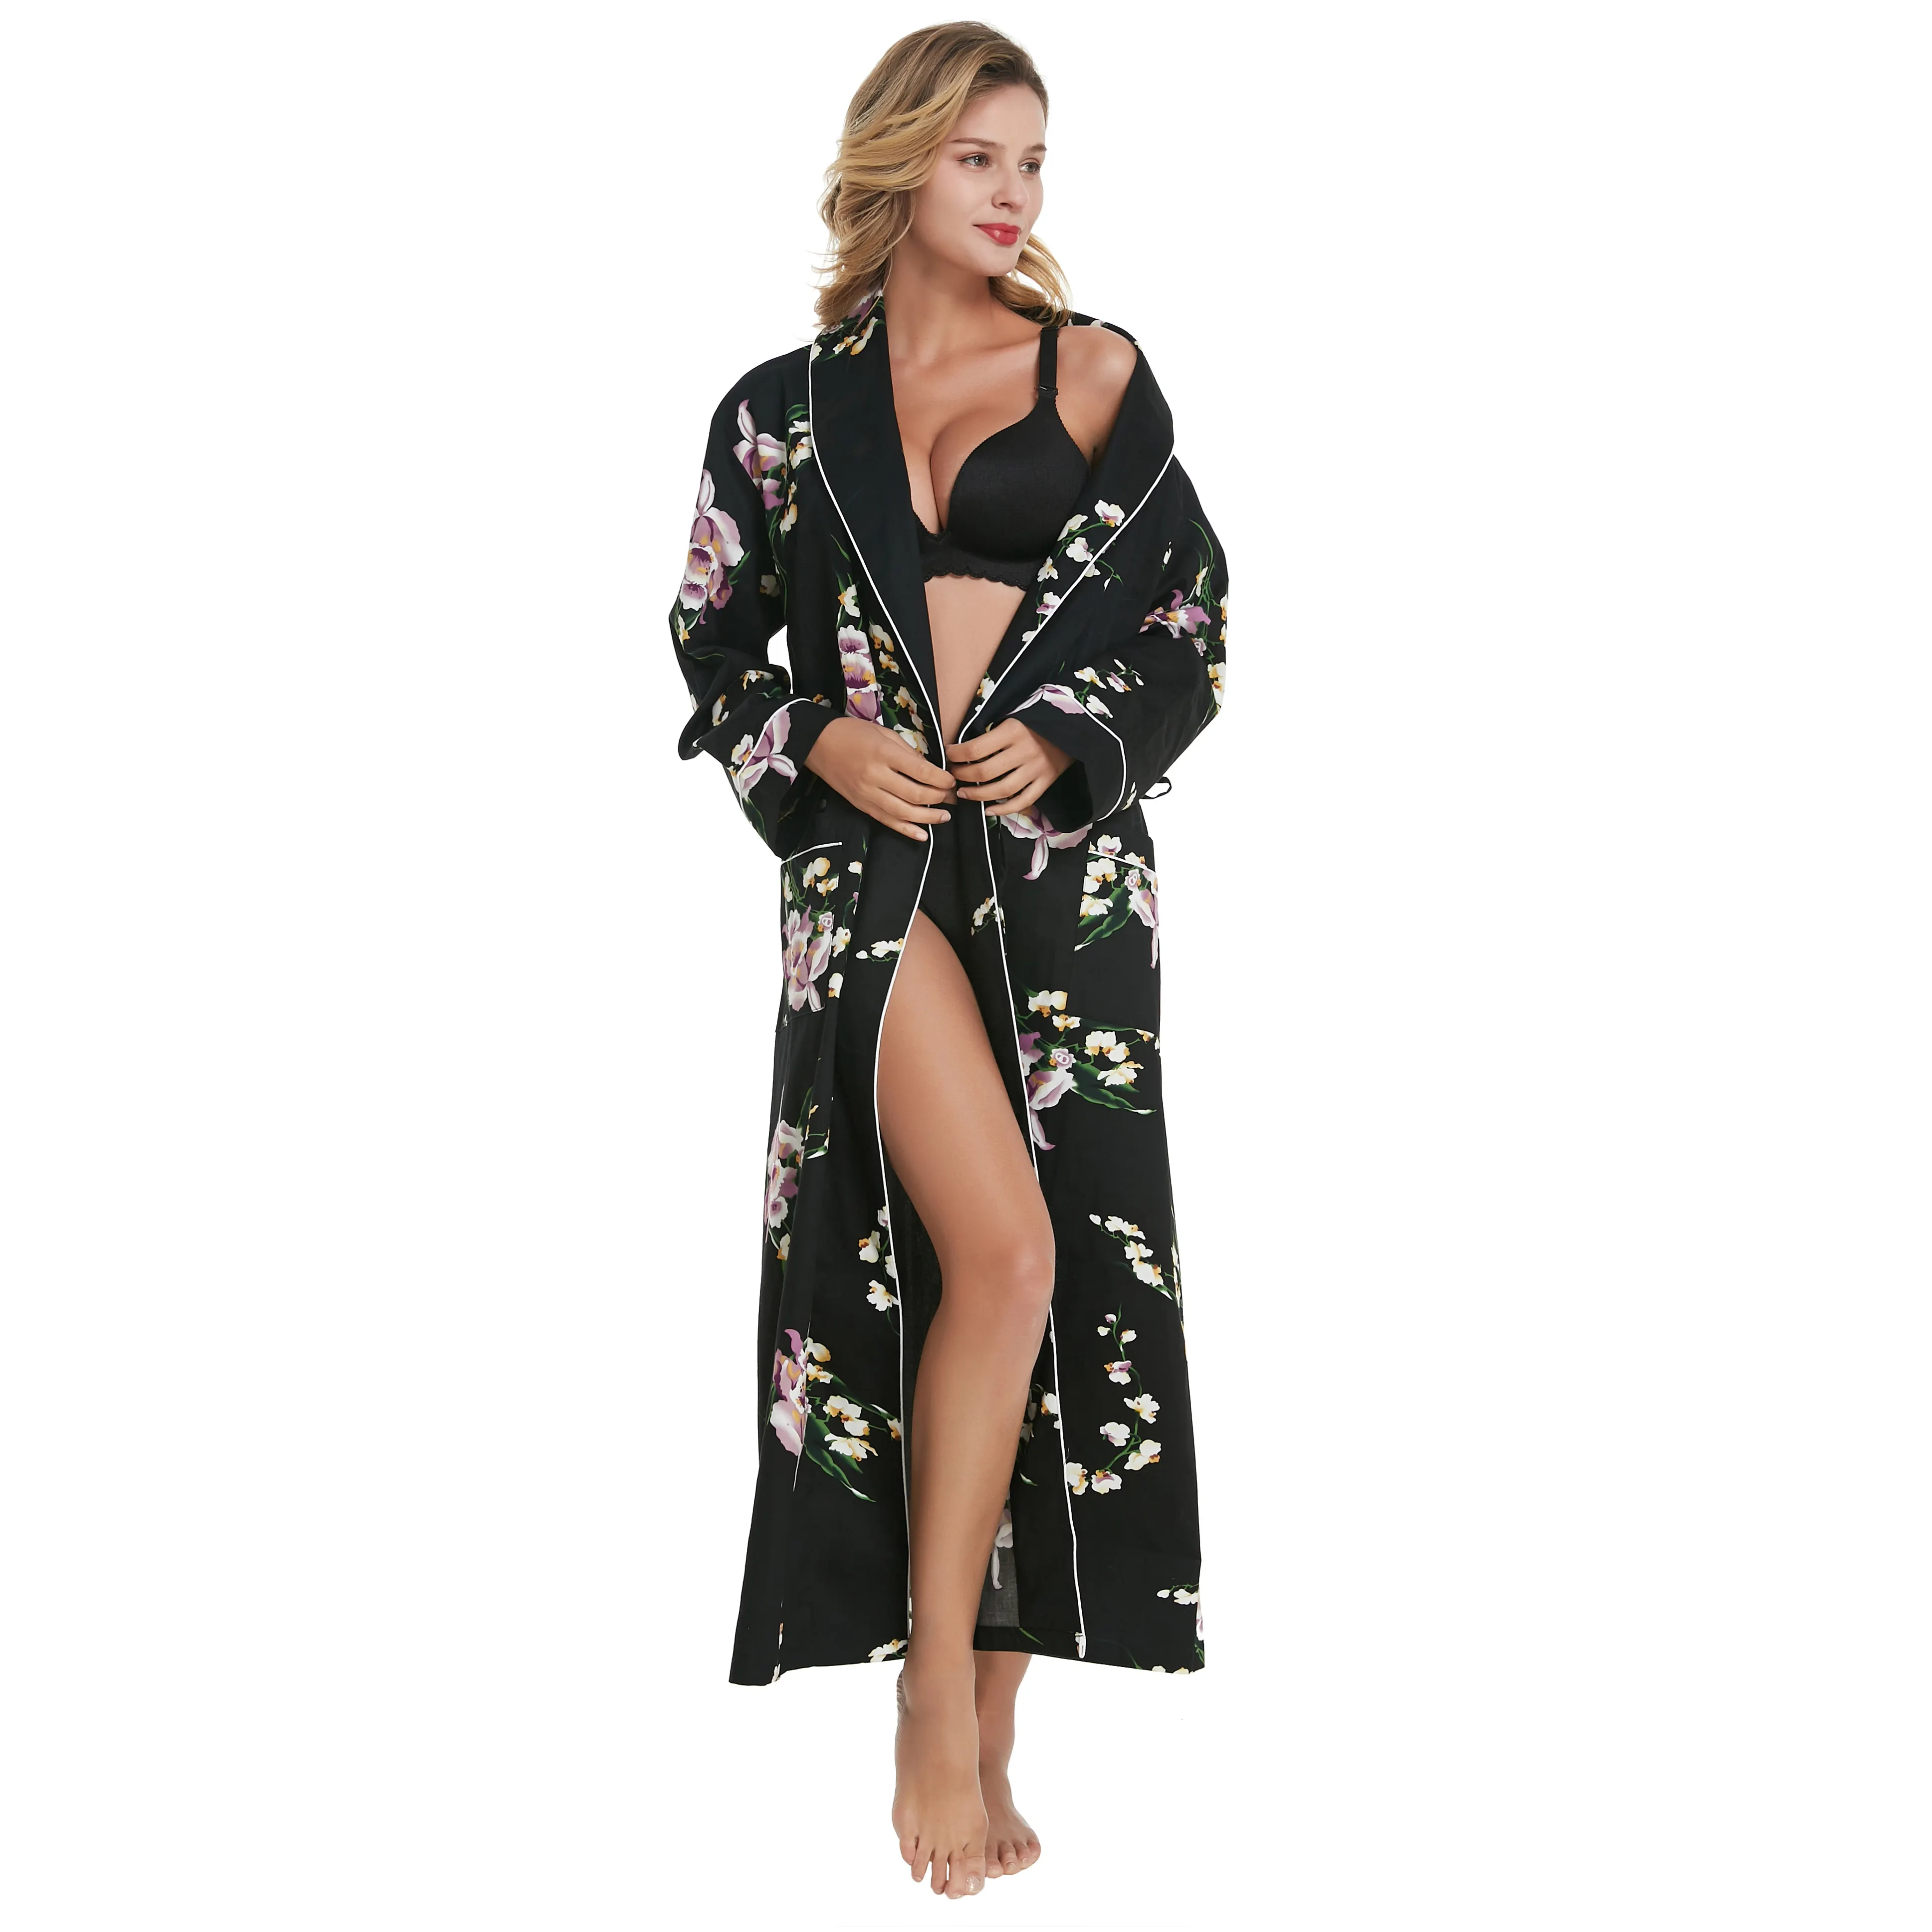 [Customize] Cotton 100% Bath robe L size Belt Made in China Towel Fabric Pajama Kimono Women's Sleepwear Soft Bathrobe